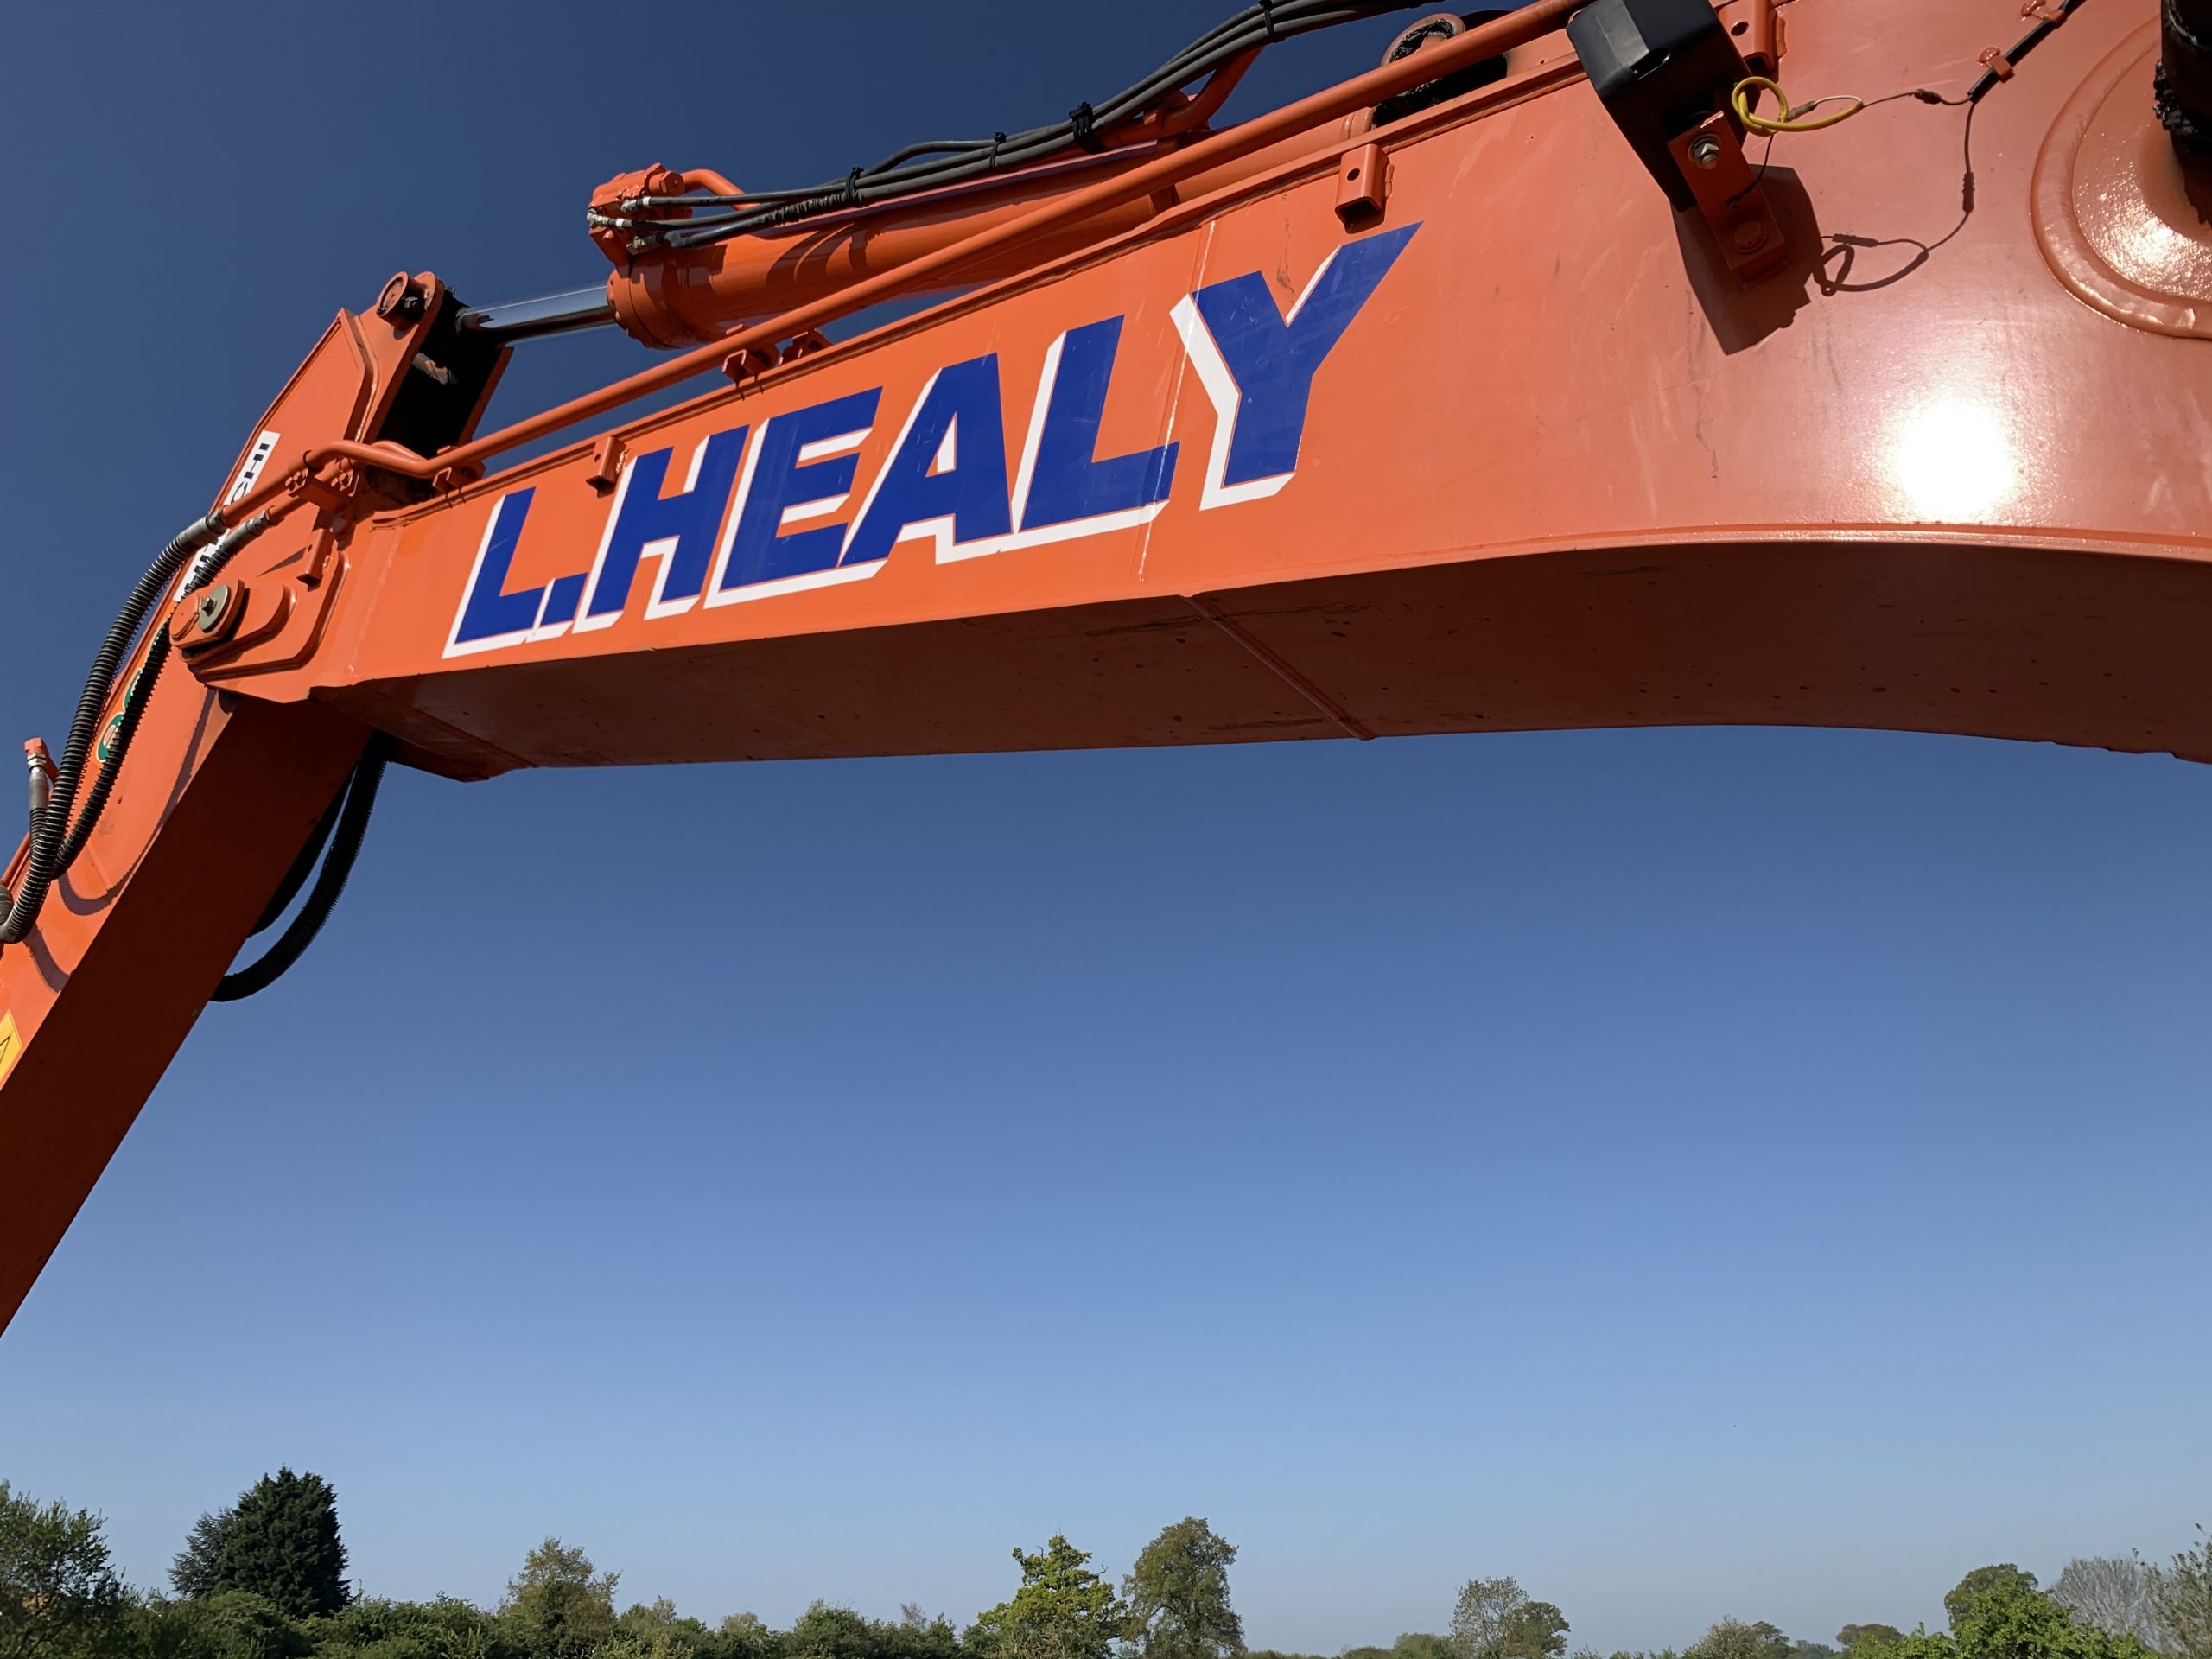 Arm of an L. Healy Ltd. Hitachi Excavator